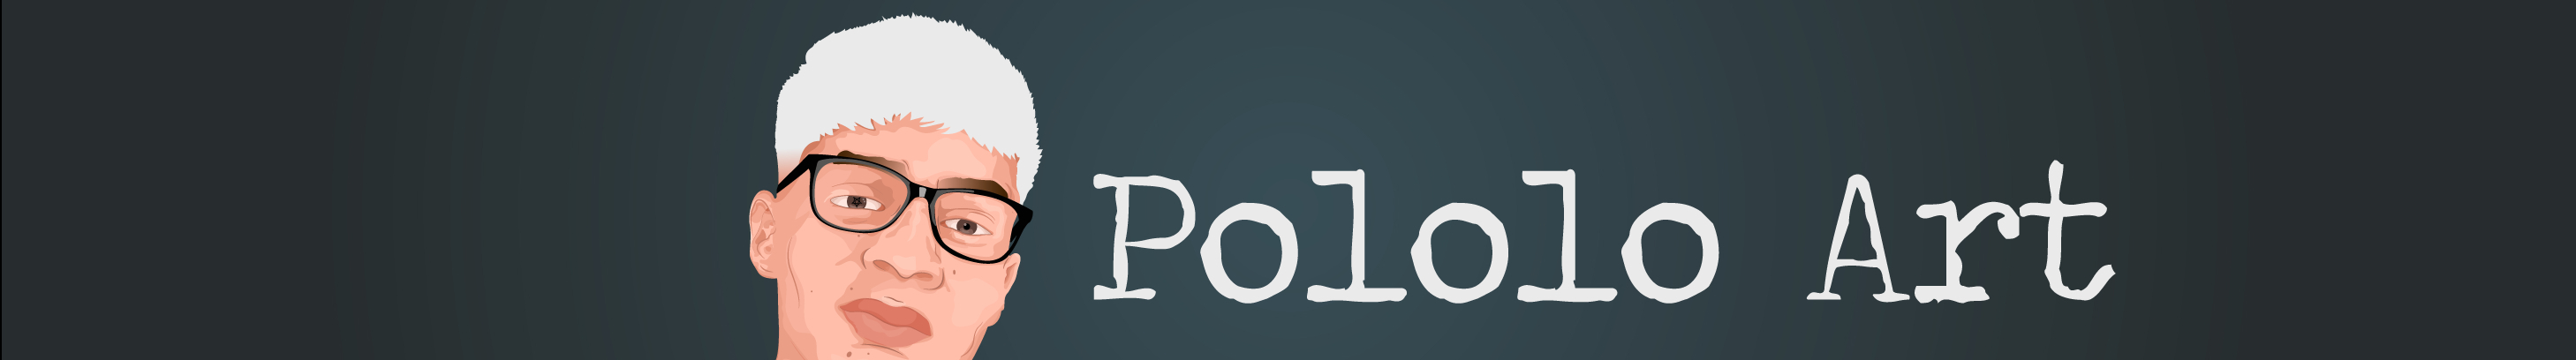 Pololo Art's profile banner